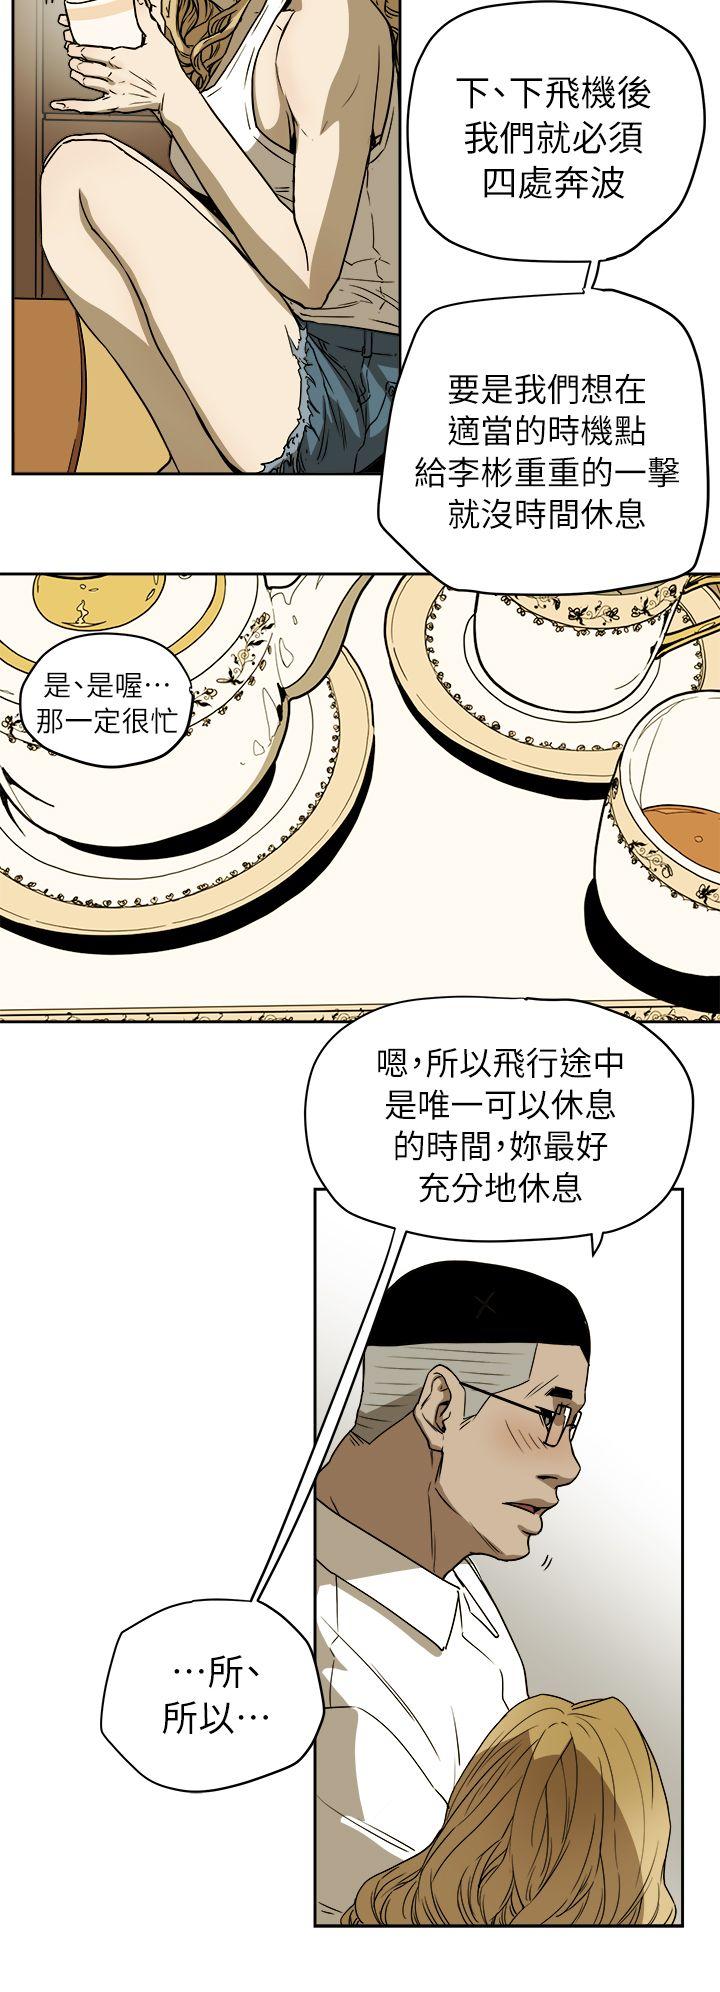 Honey trap 甜蜜陷阱  第91话 漫画图片6.jpg